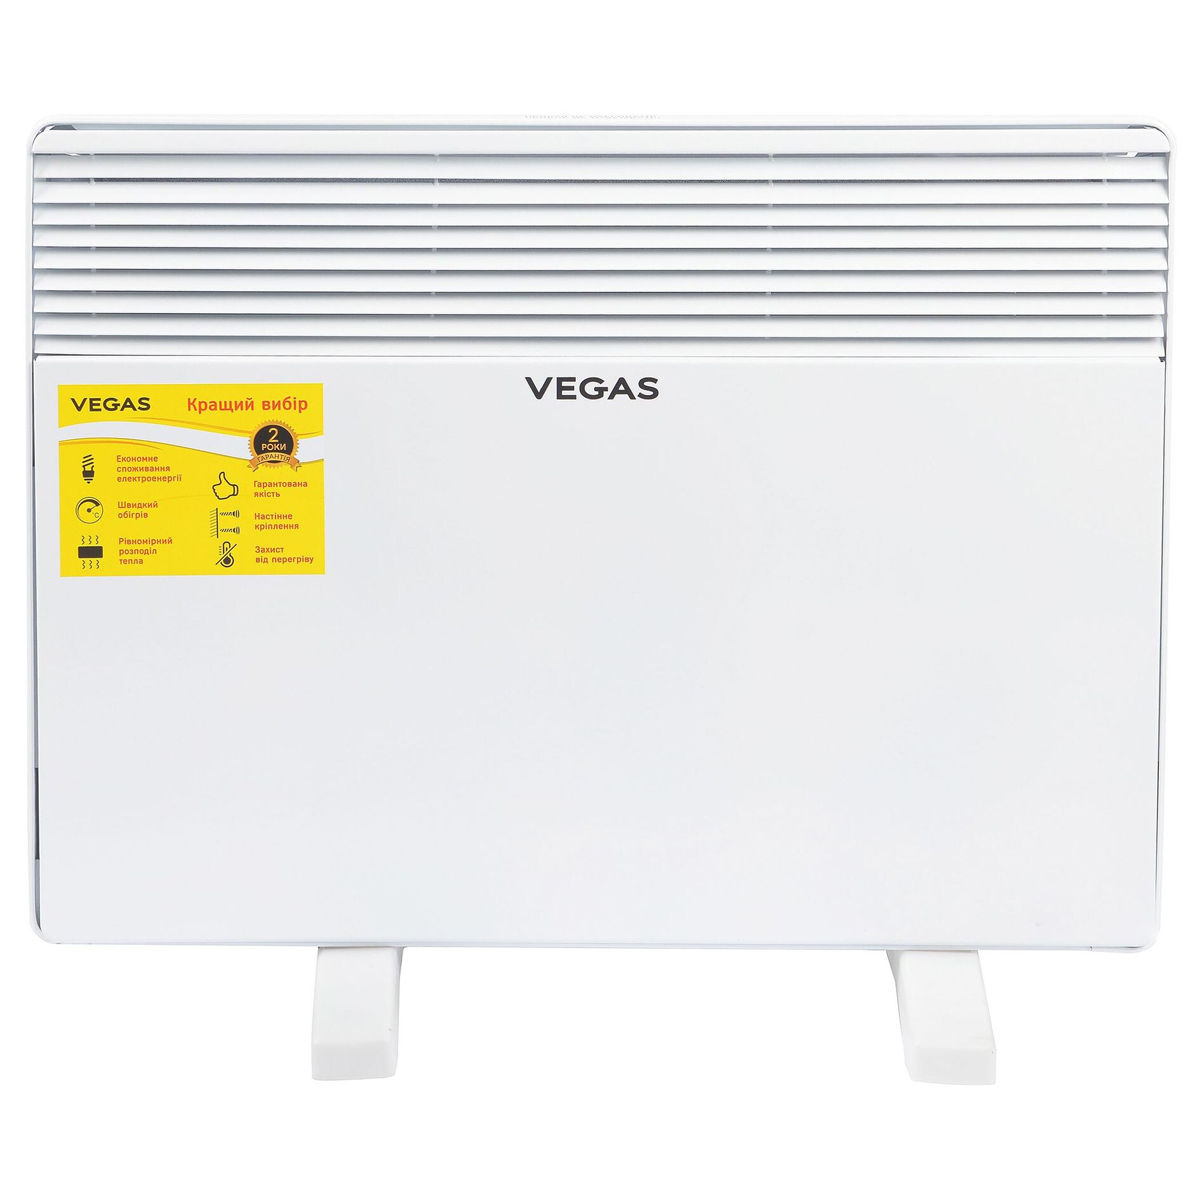 Цена электроконвектор vegas мощностью 2000 вт / 2 квт Vegas VKH-2000 в Киеве